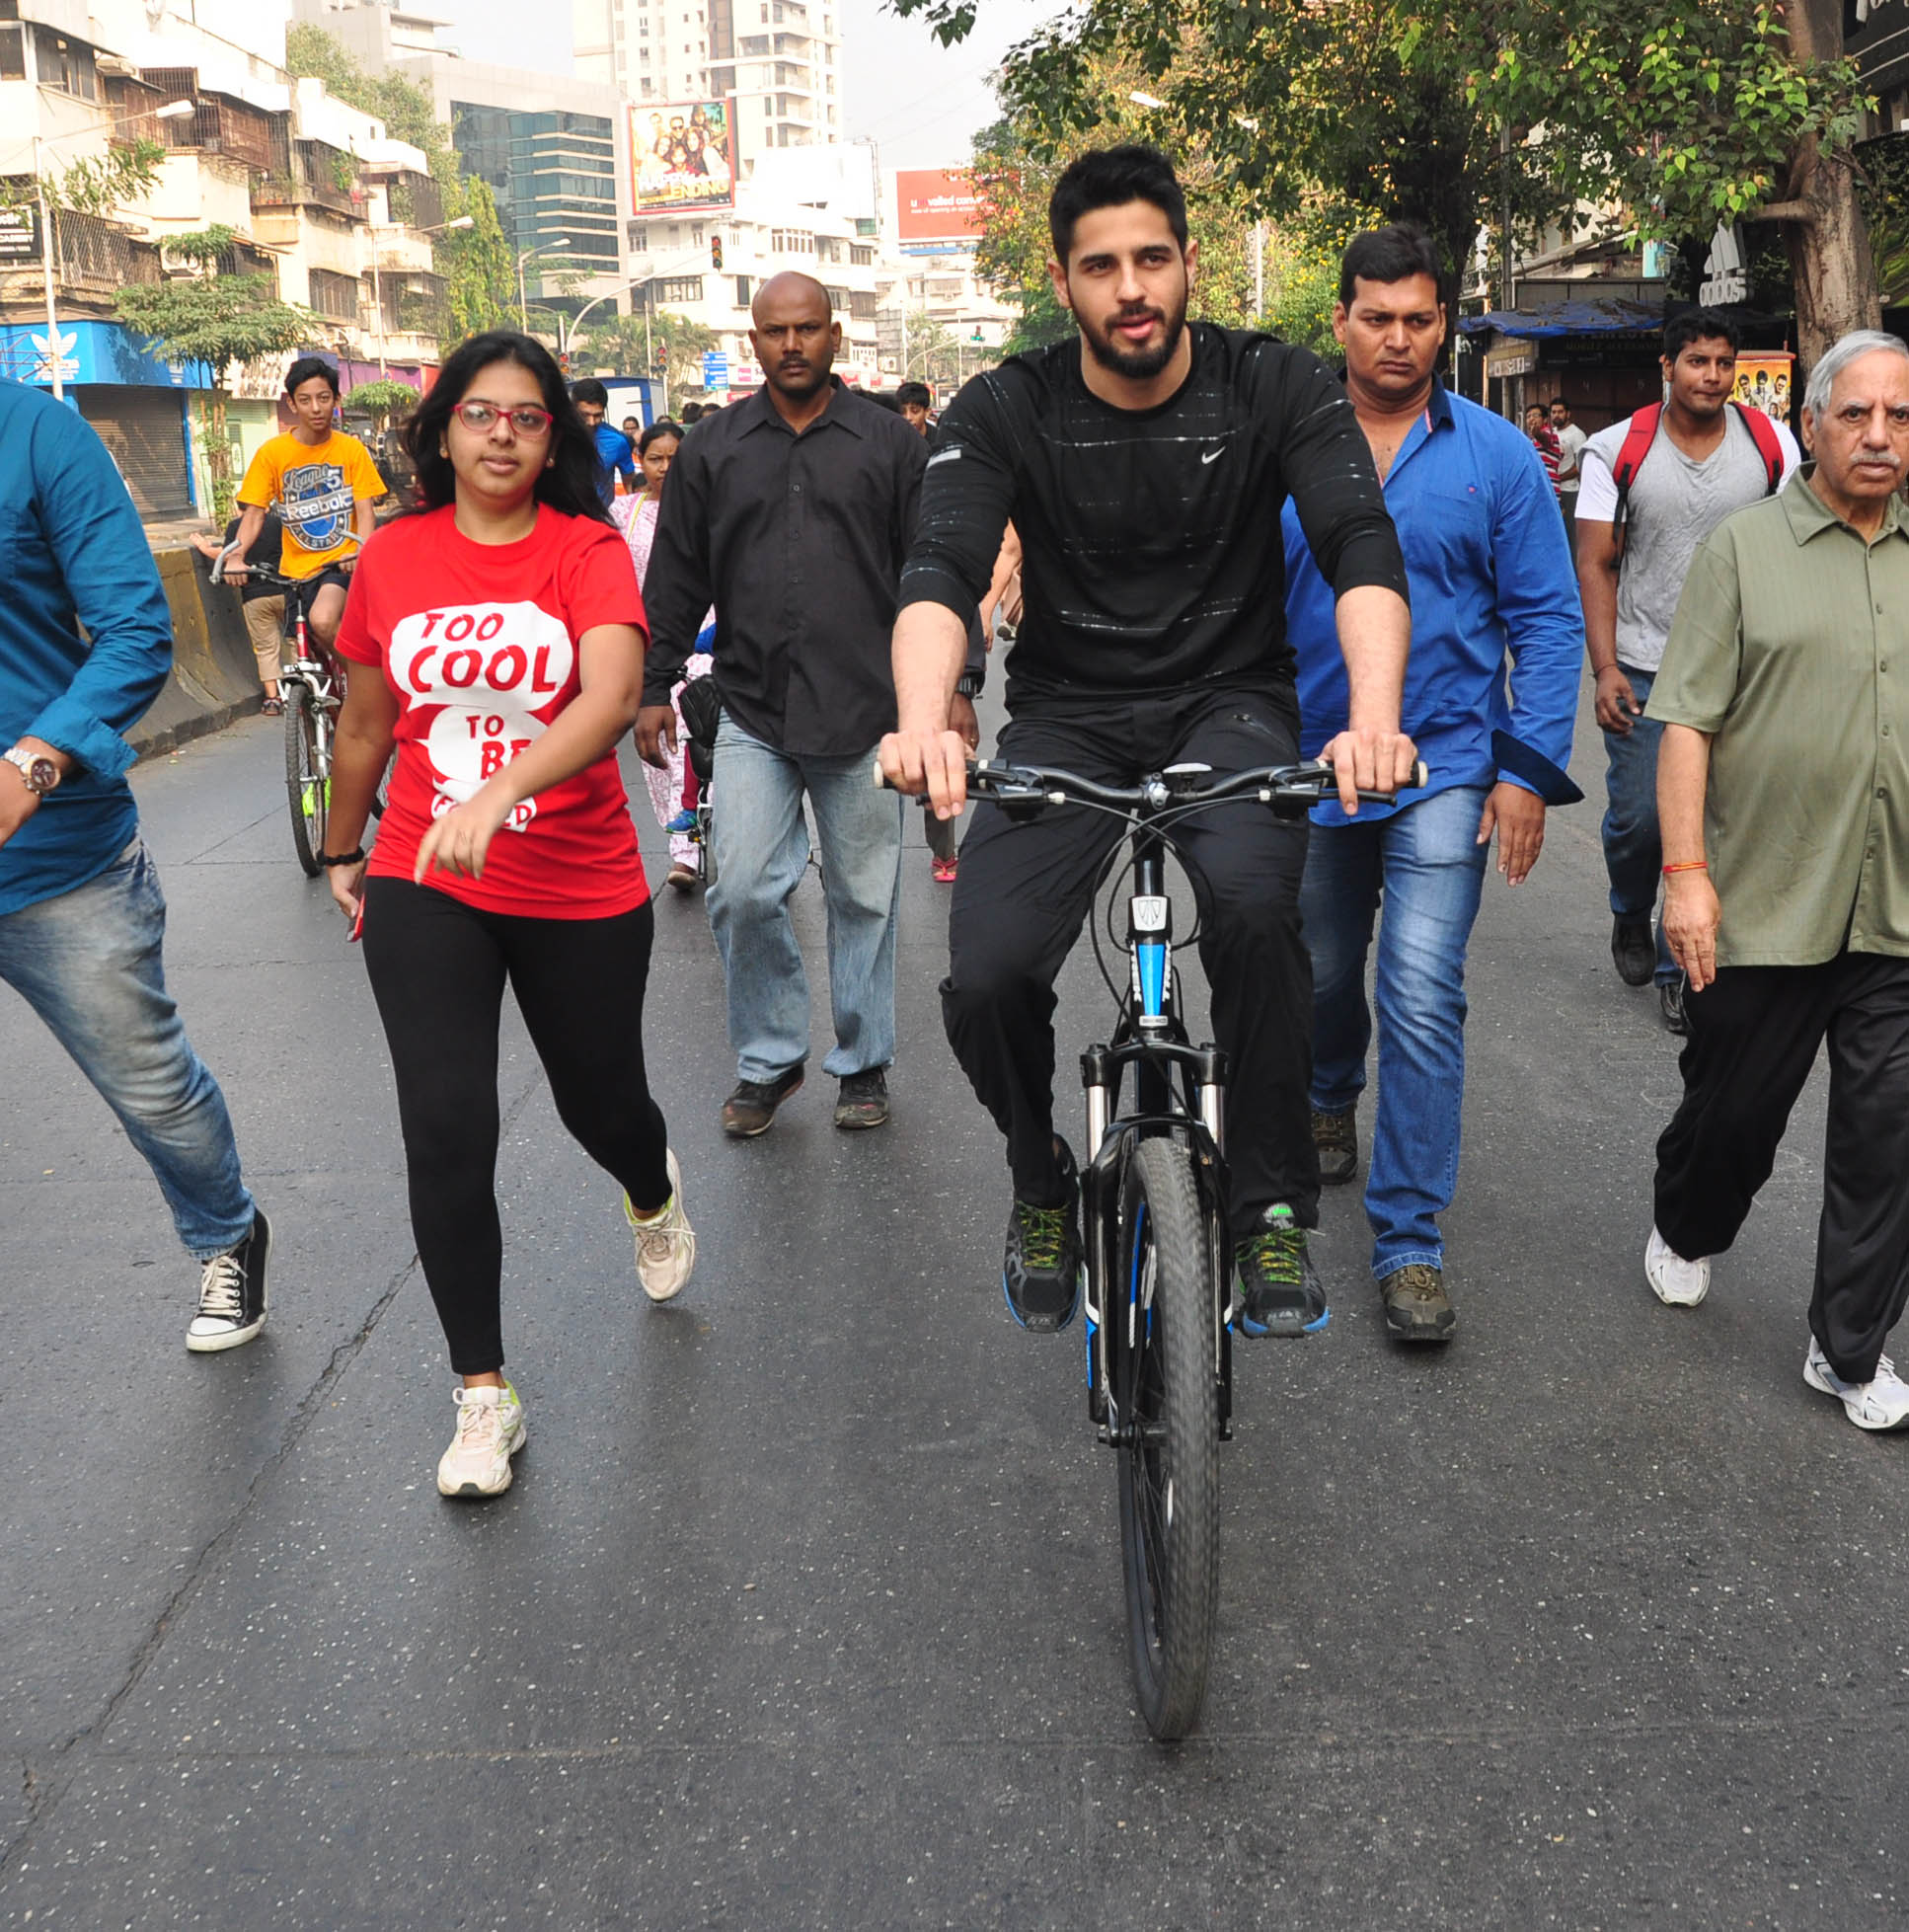 Sidharth Malhotra Cycles at The Equal Street Movement